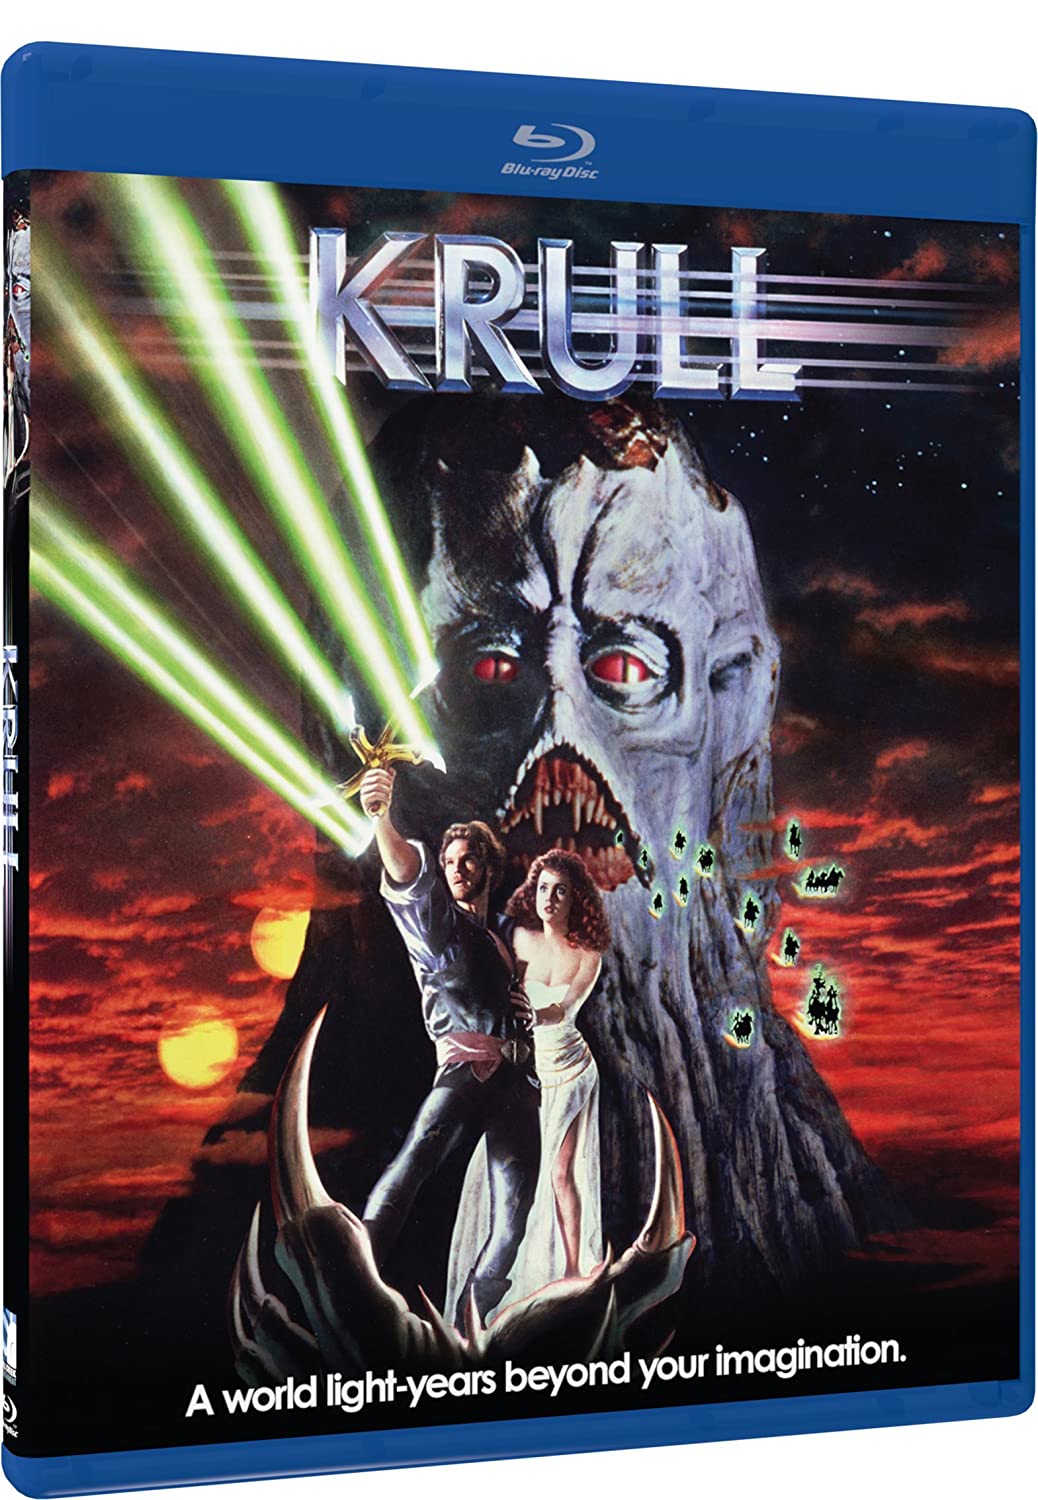 Stiahni si Filmy CZ/SK dabing Planeta Krull - Krull (1983)(Remastered)(BluRay)(1080p)(CZ-SK-EN) = CSFD 69%